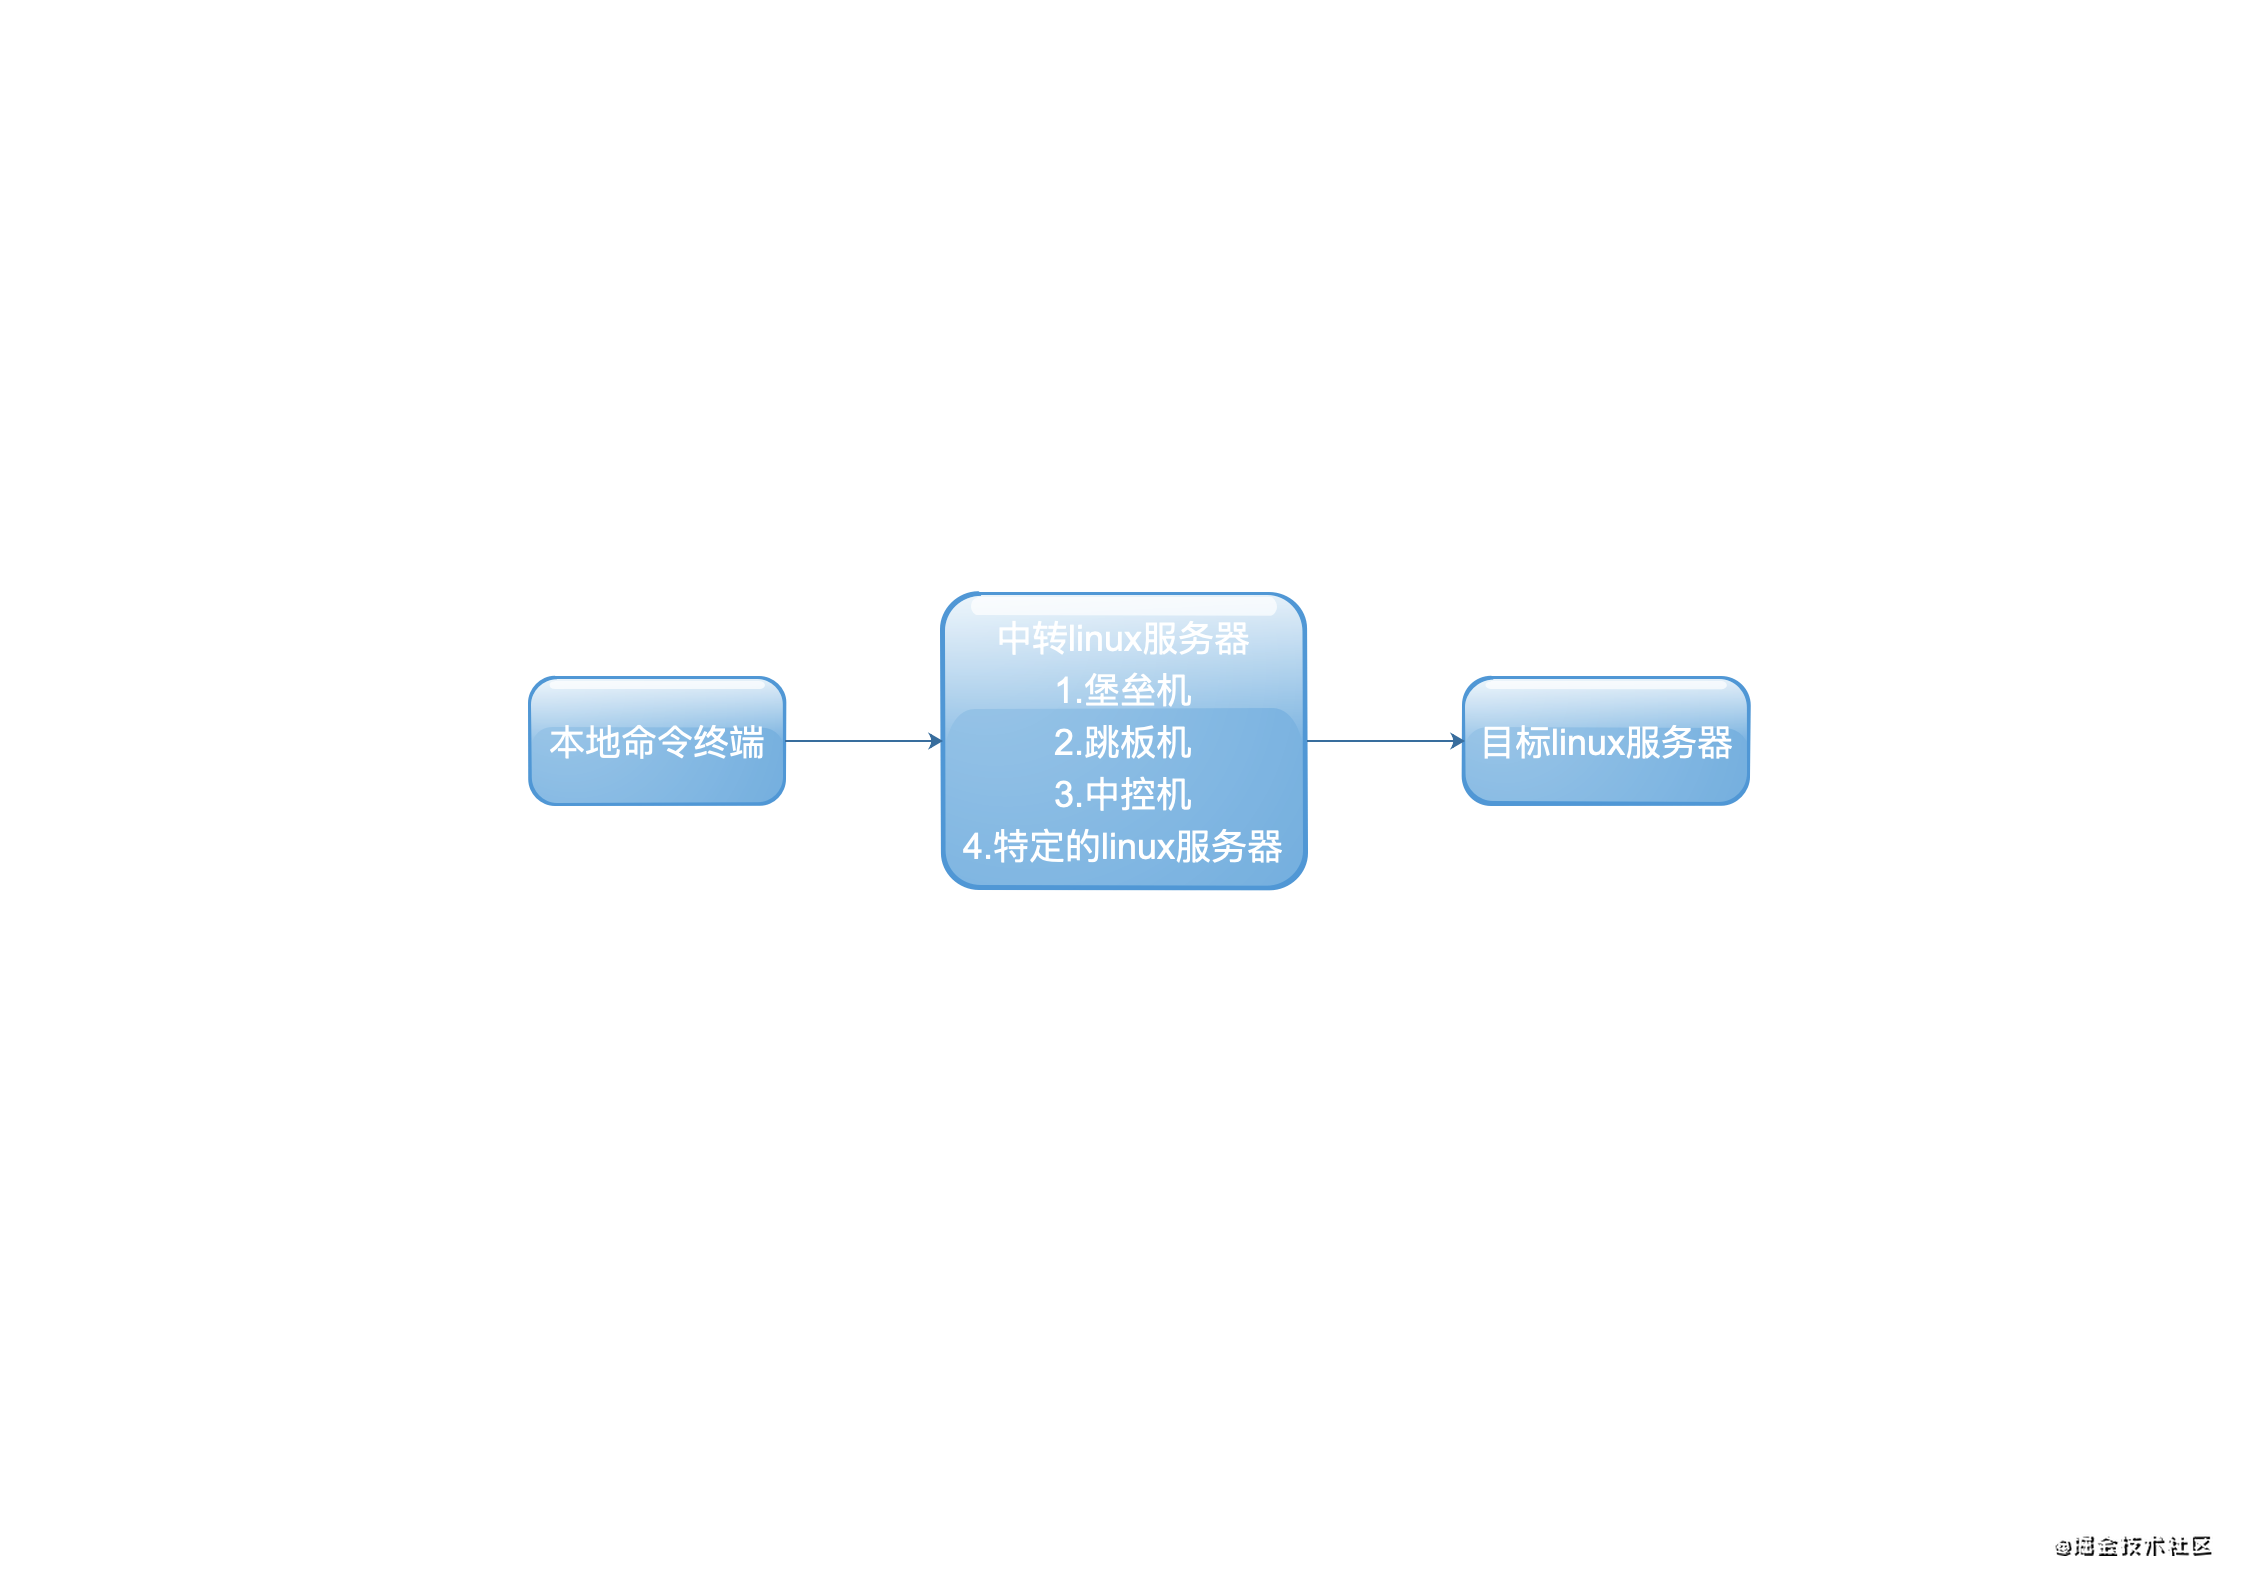 ssh应用- linux服务器A登陆linux服务器B